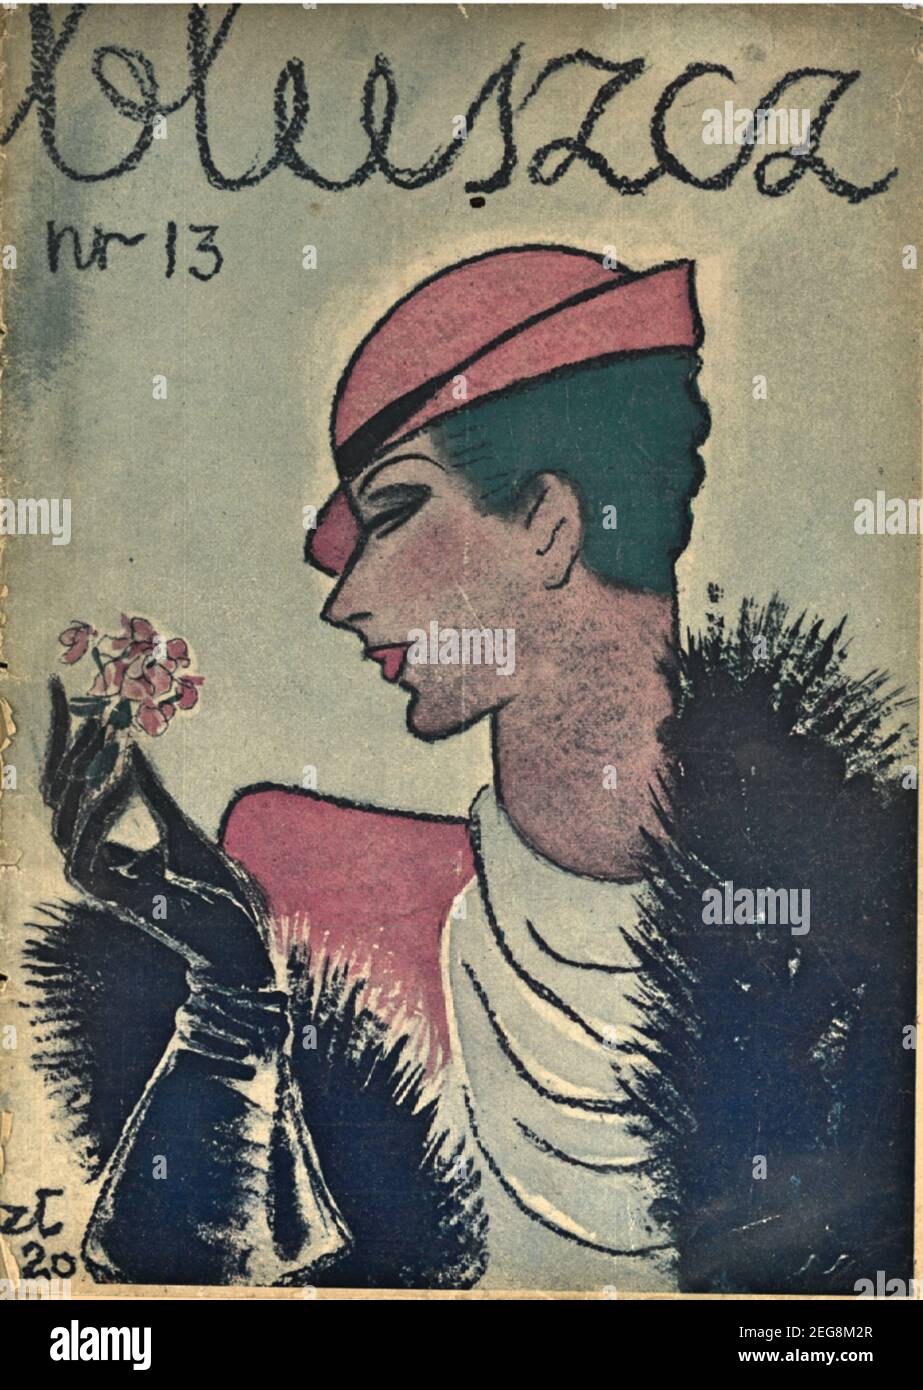 Okładka przedwojennego magazynu dla kobiet Bluszcz 1933, Lata 30te, copertina della rivista polacca di preguerra per donne in stile art deco Bluszcz Foto Stock